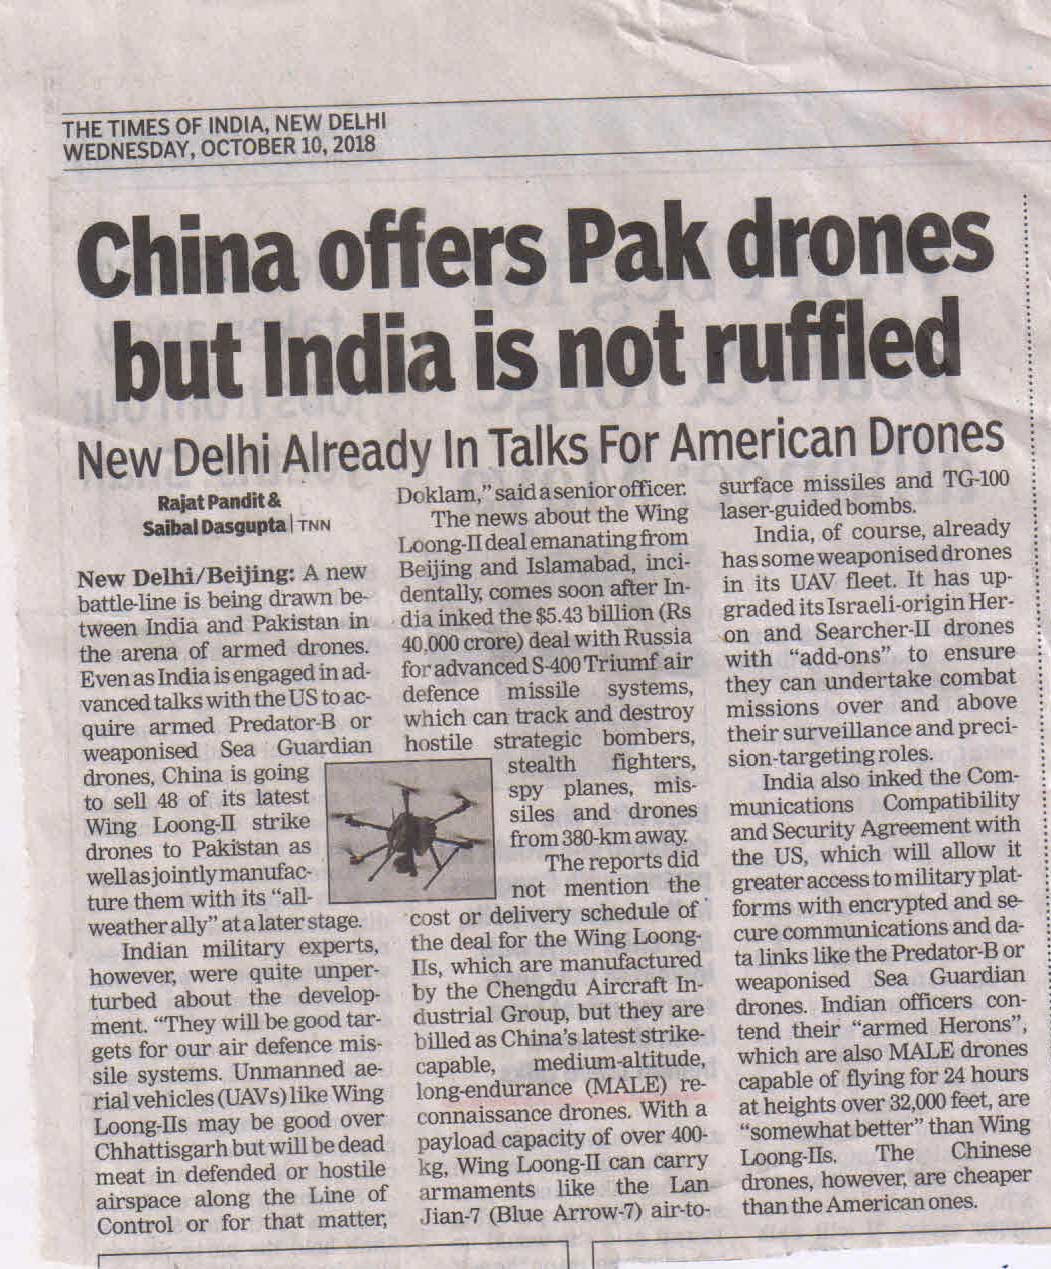 Drone International Expo Media Coverage